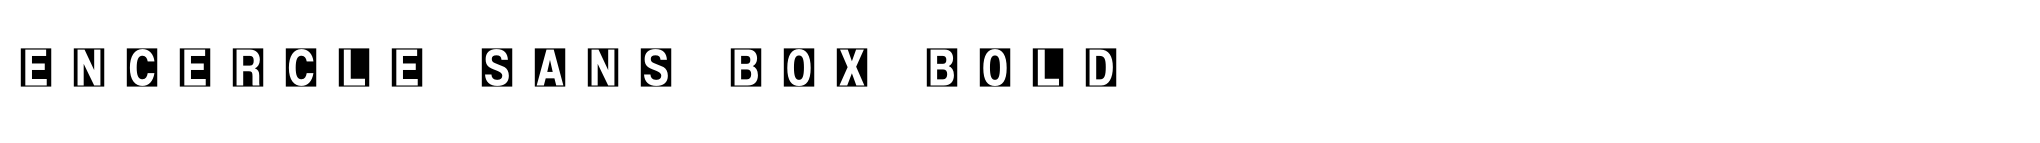 Encercle Sans Box Bold image